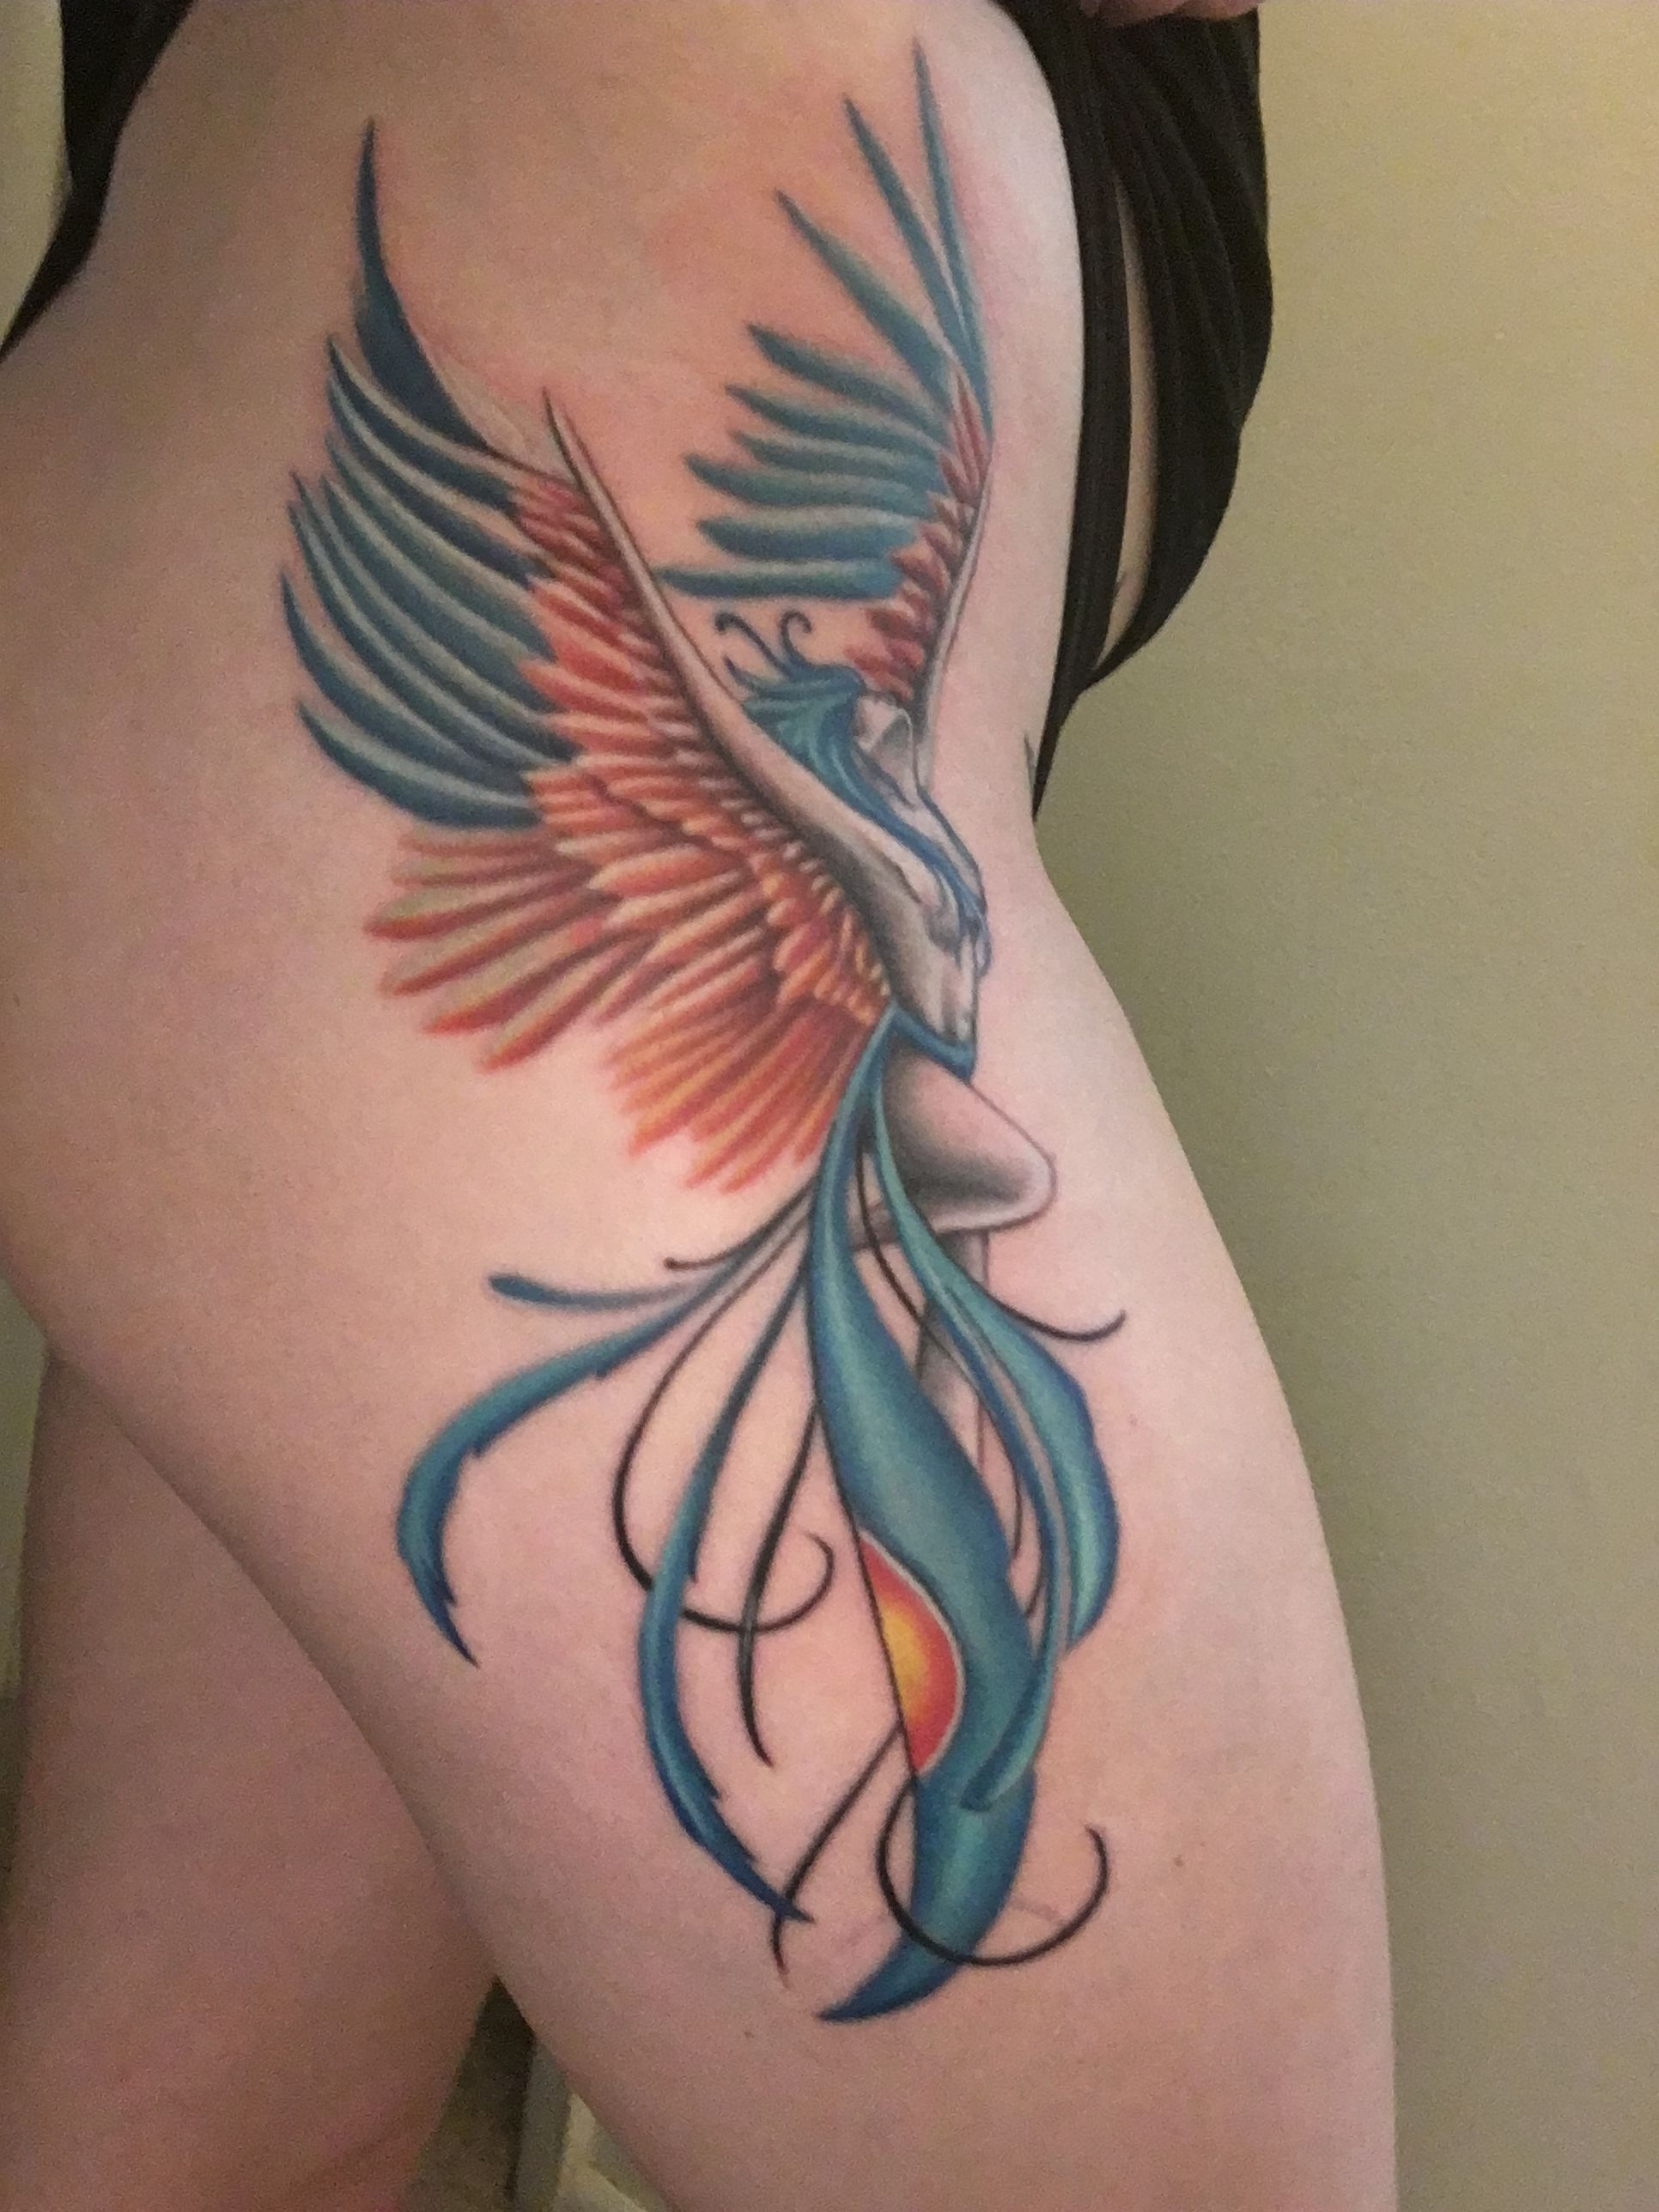 Best Tattoo Ideas For Men Awesome Tattoos Phoenix Bird Tattoos with regard to sizing 1932 X 2576